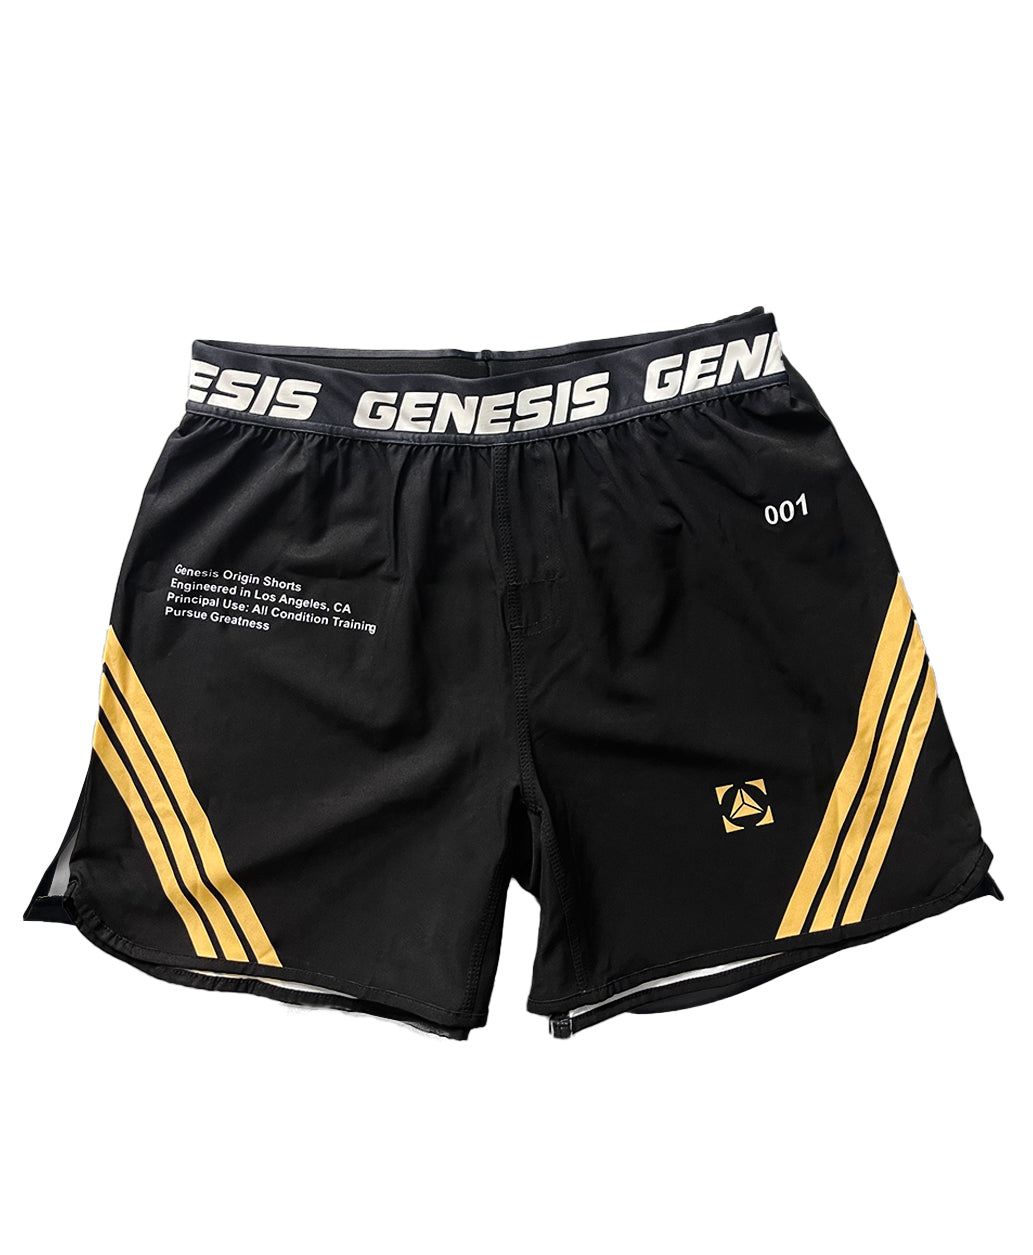 001. Origin Pro Shorts – Genesis